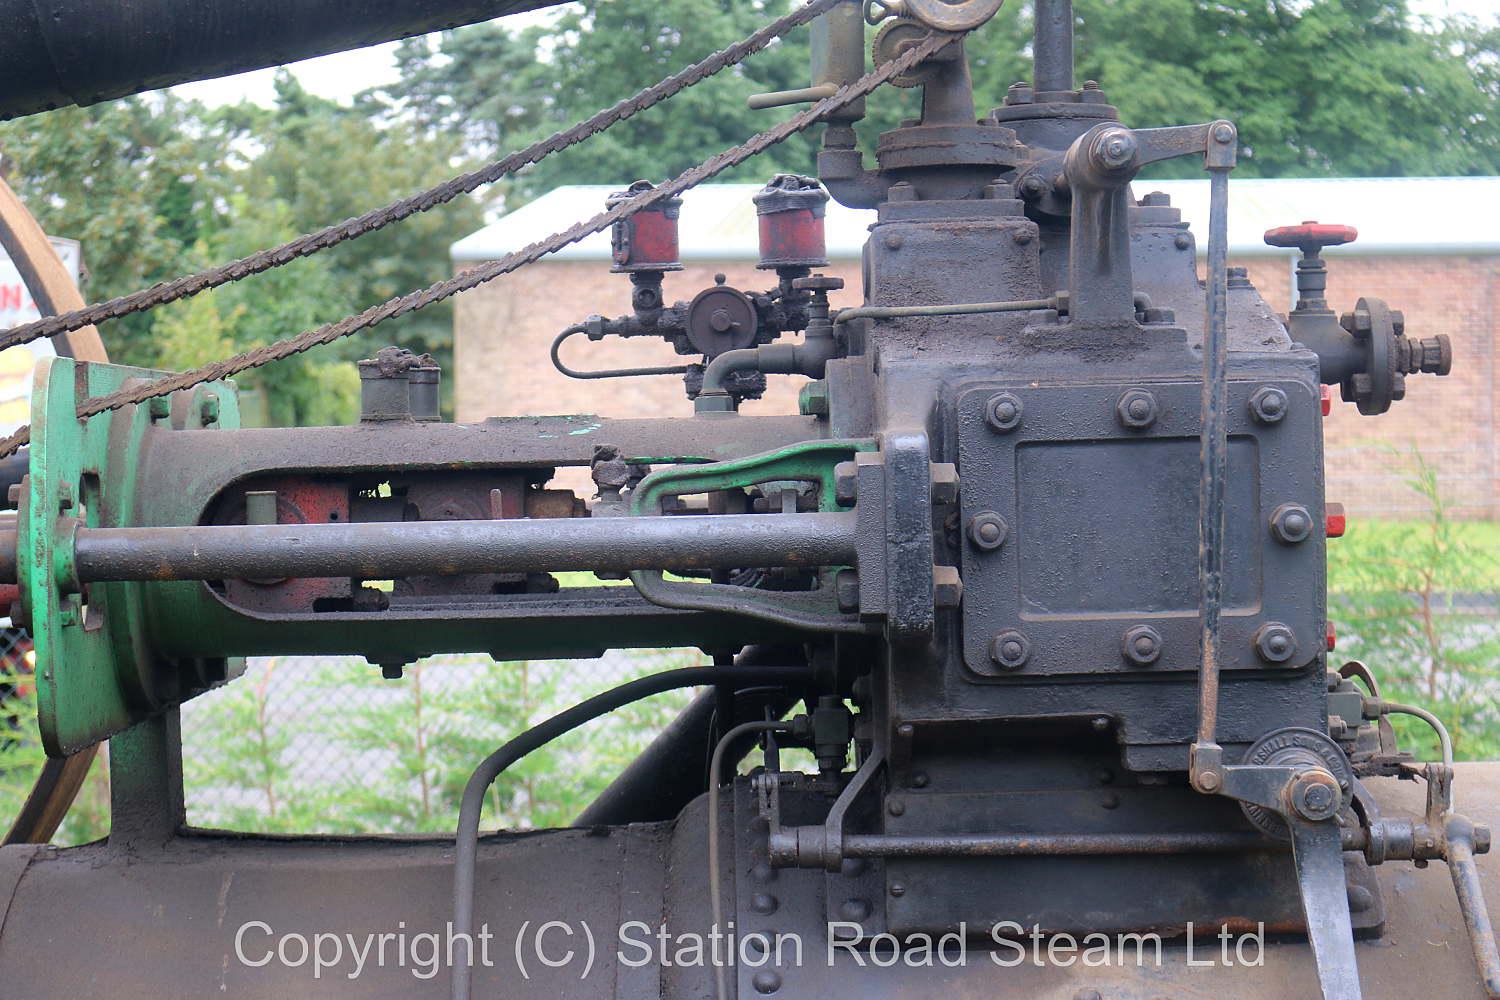 1915 Marshall 16nhp twin cylinder portable engine